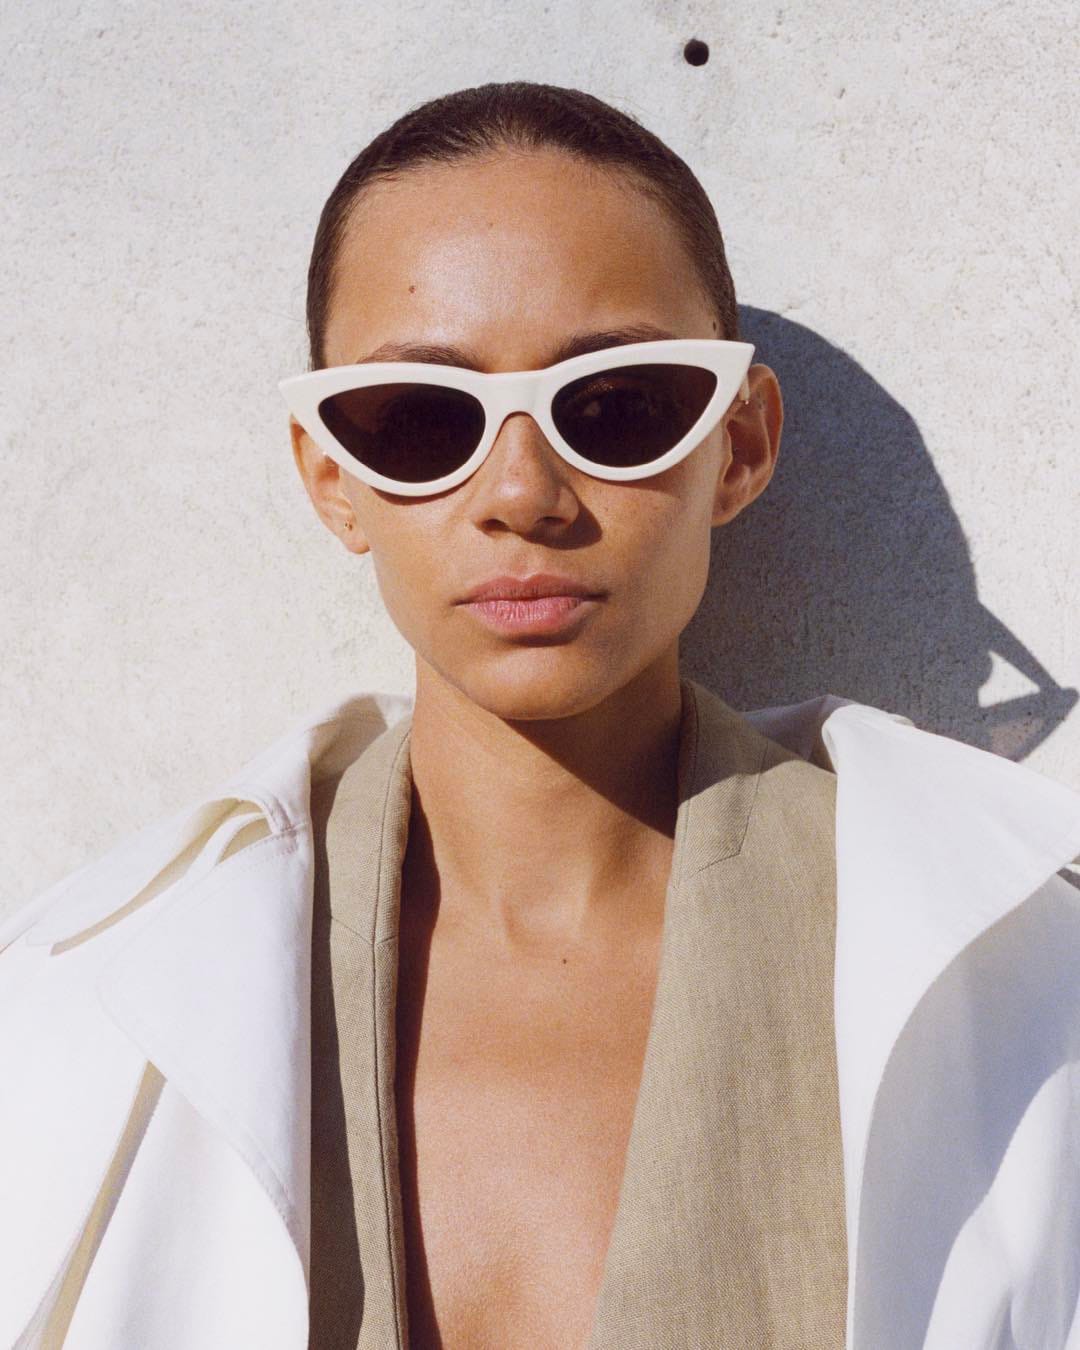 Details more than 133 buy celine sunglasses latest